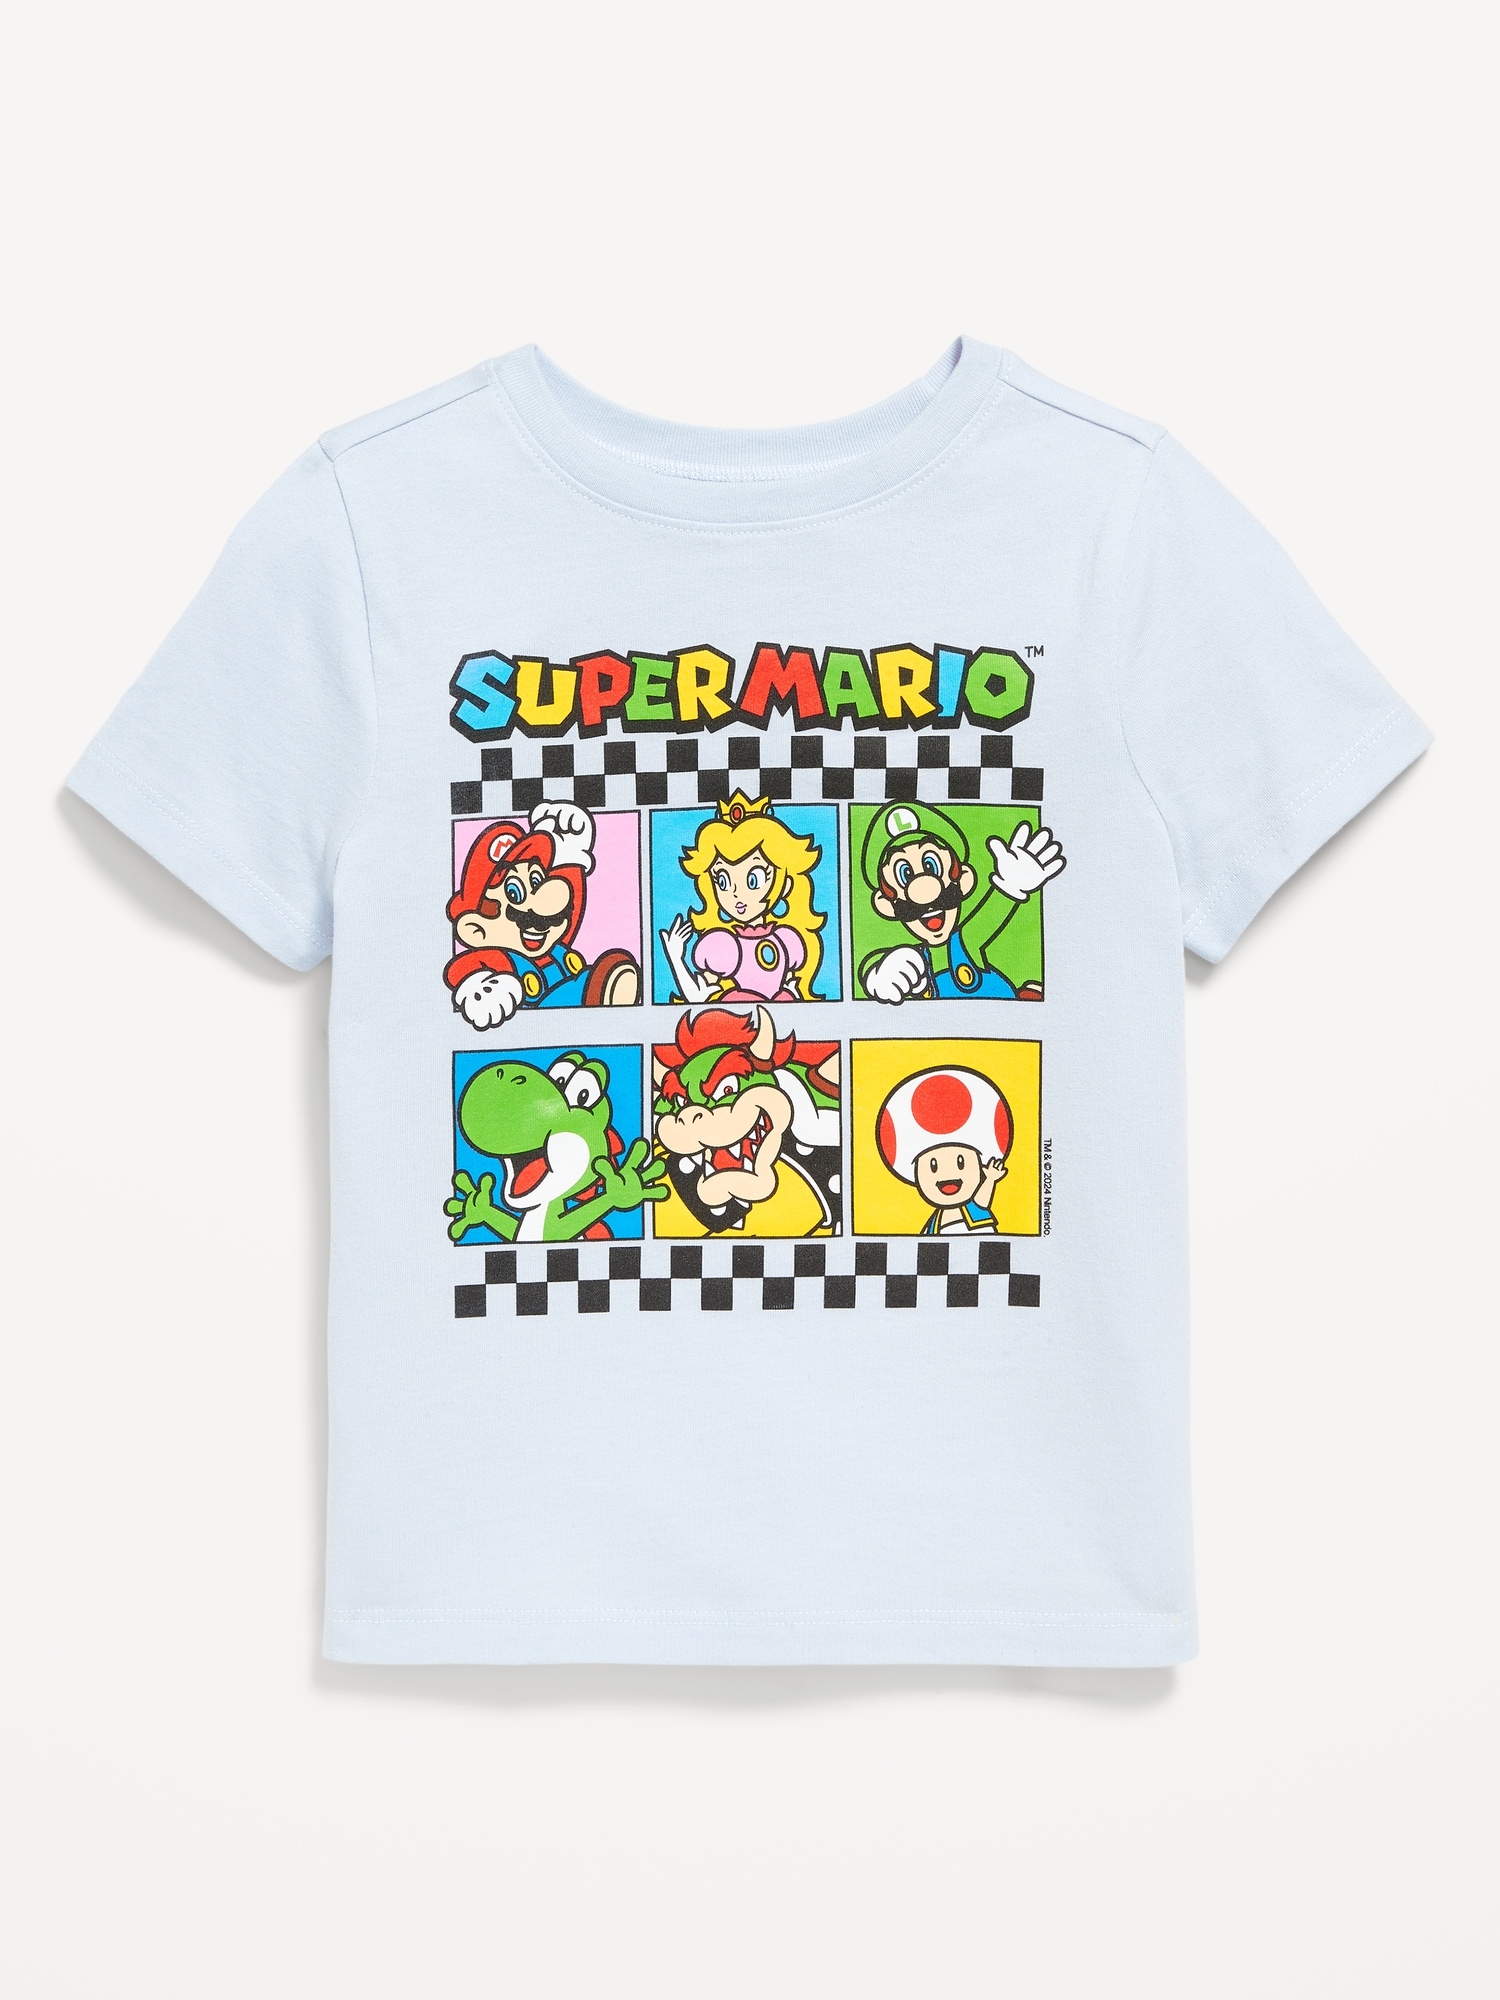 Super Mario Unisex Graphic T-Shirt for Toddler